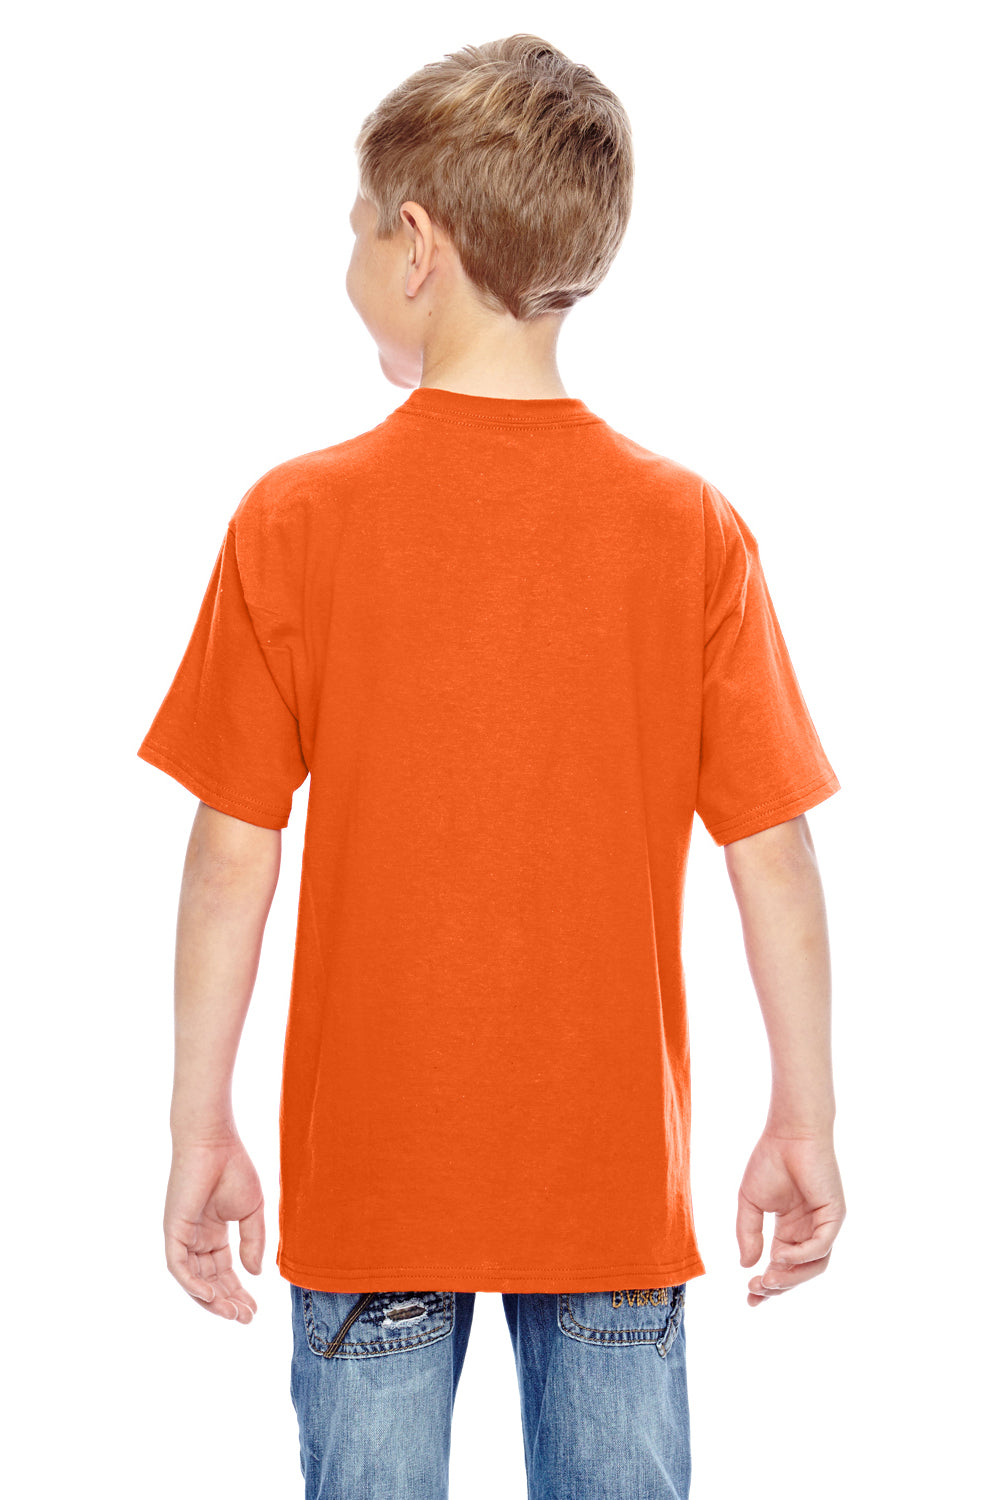 Hanes 498Y Youth Nano-T Short Sleeve Crewneck T-Shirt Orange Back